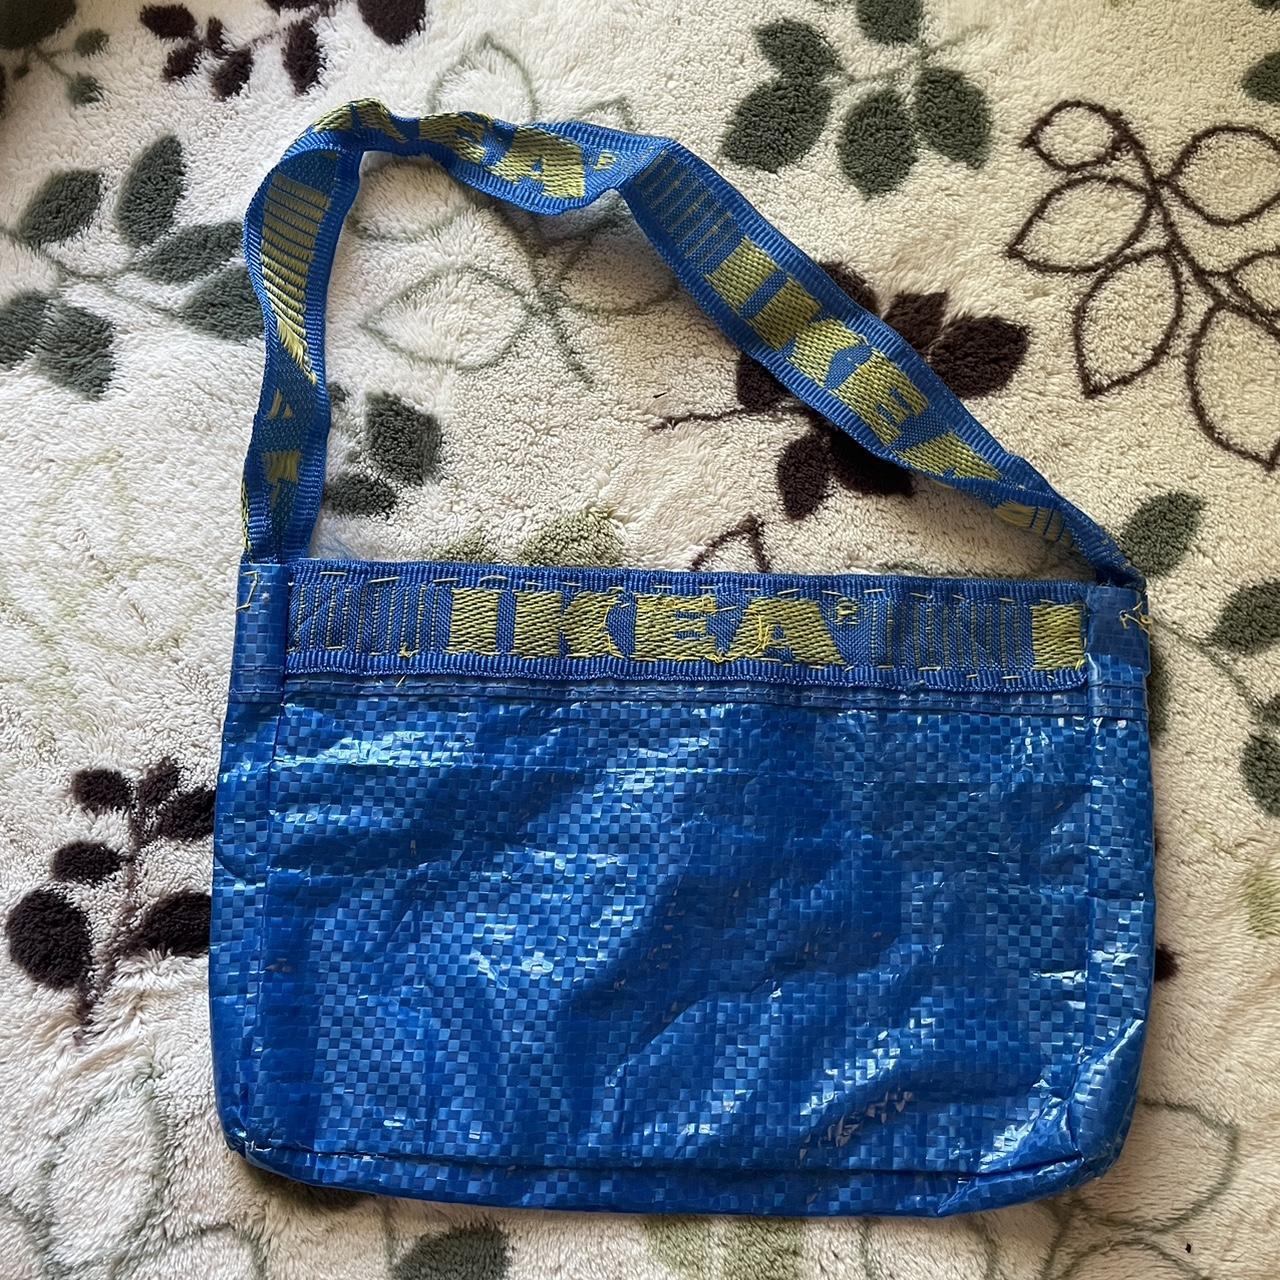 IKEA Women's Blue and Yellow Bag